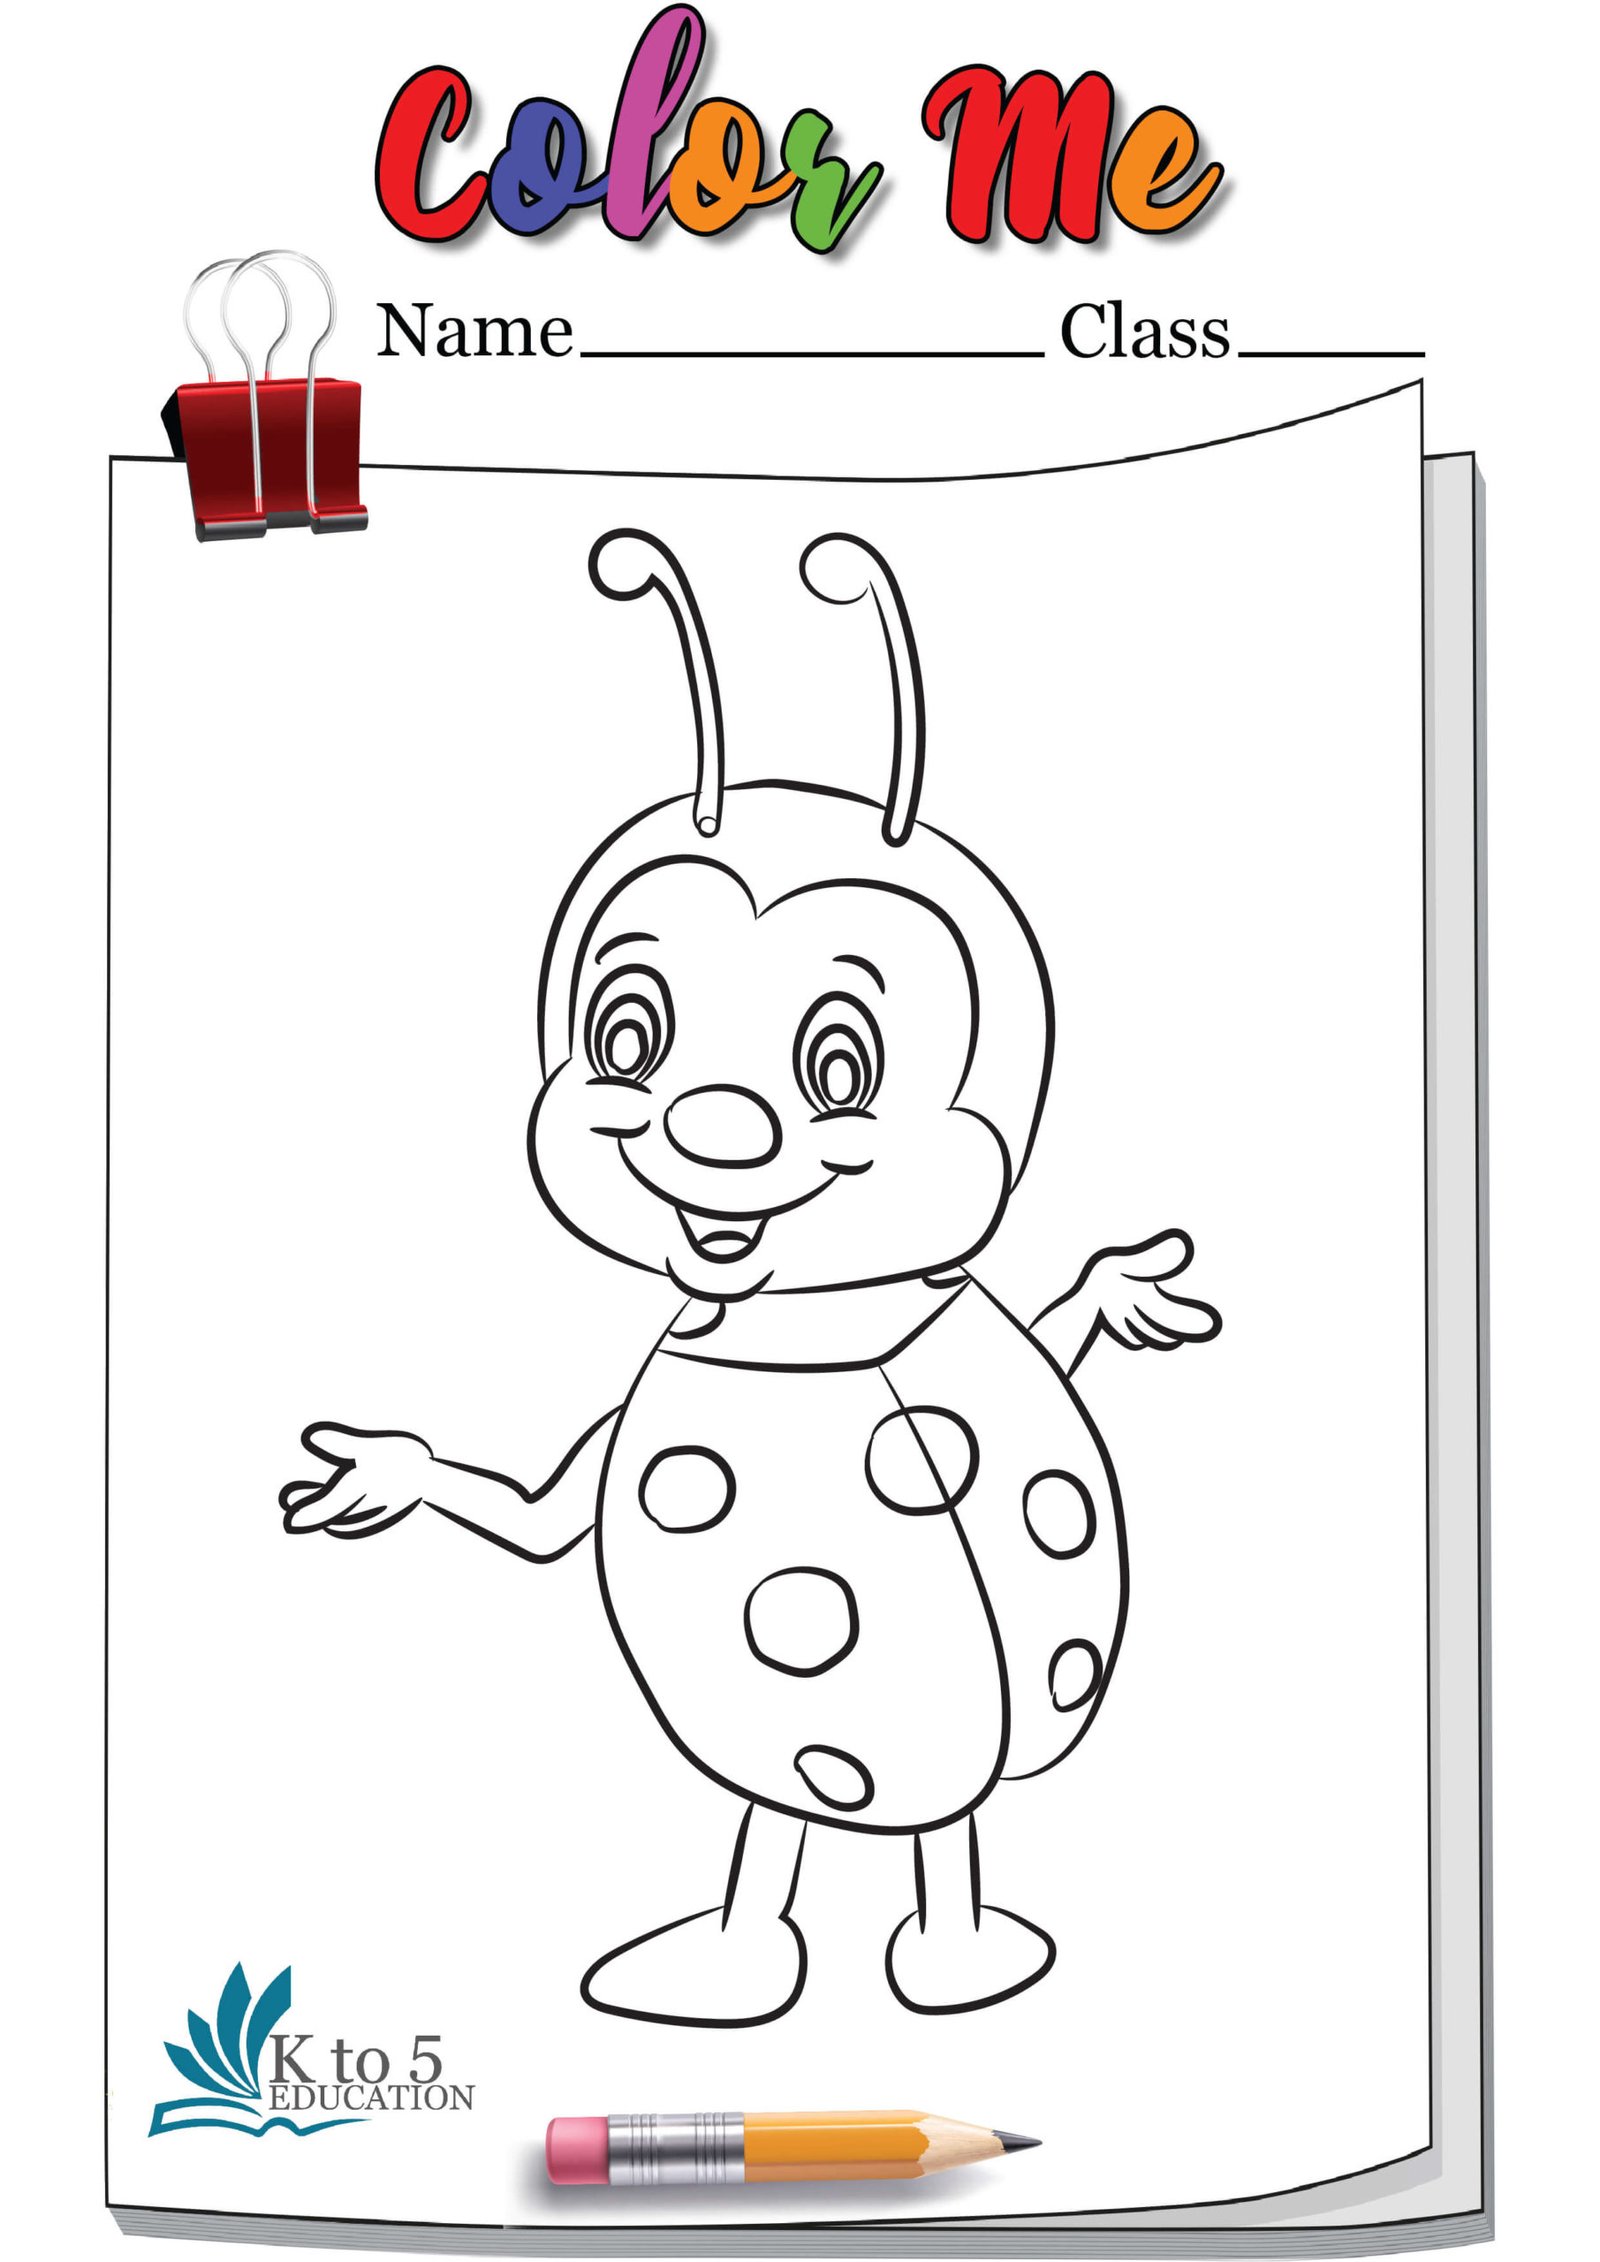 Ladybug wondering coloring page worksheet